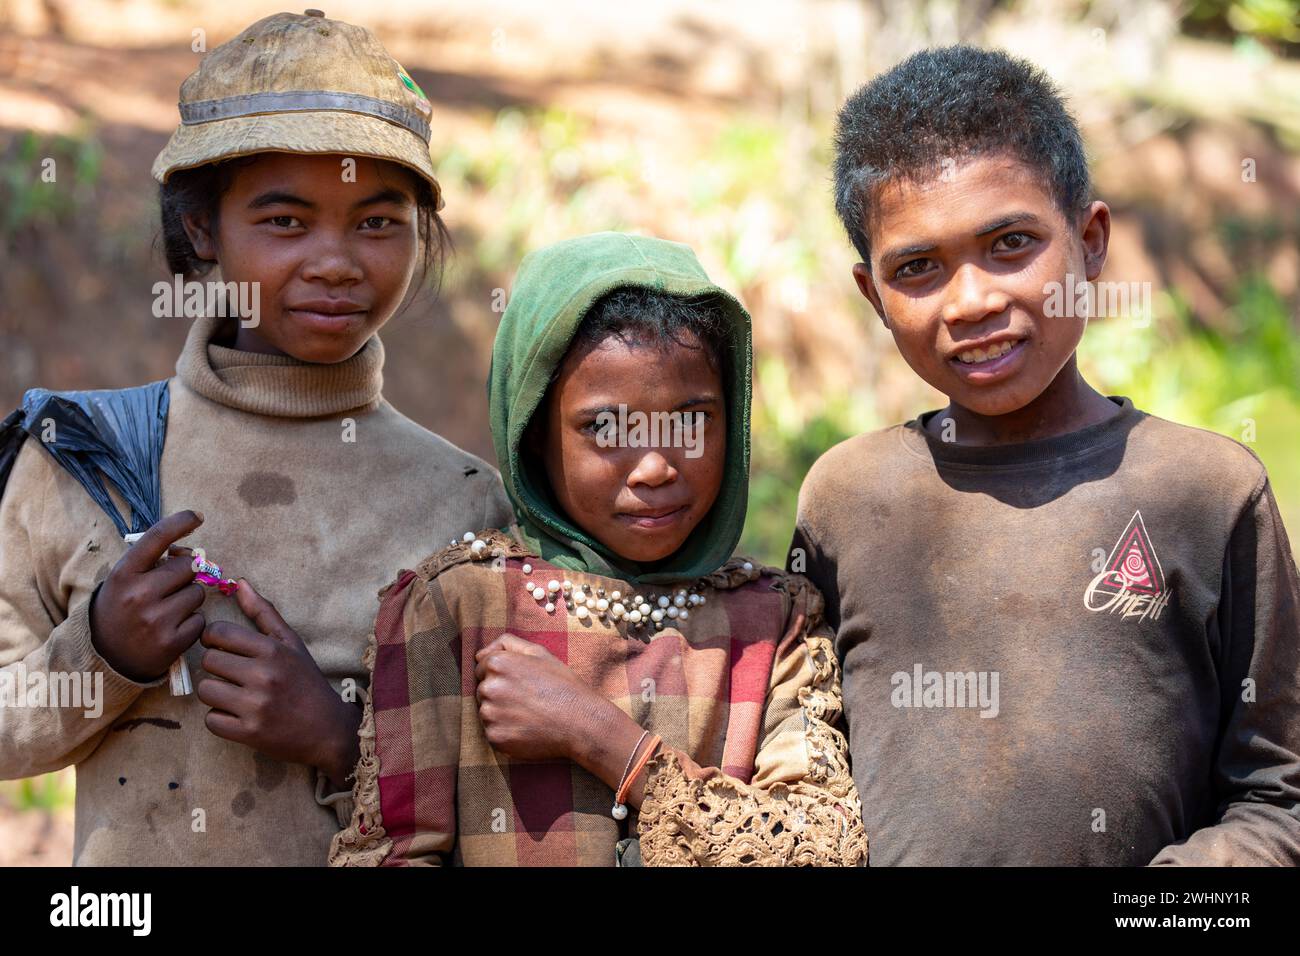 Local Malagasy boys in a community. Ambatolampy, Madagascar Stock Photo